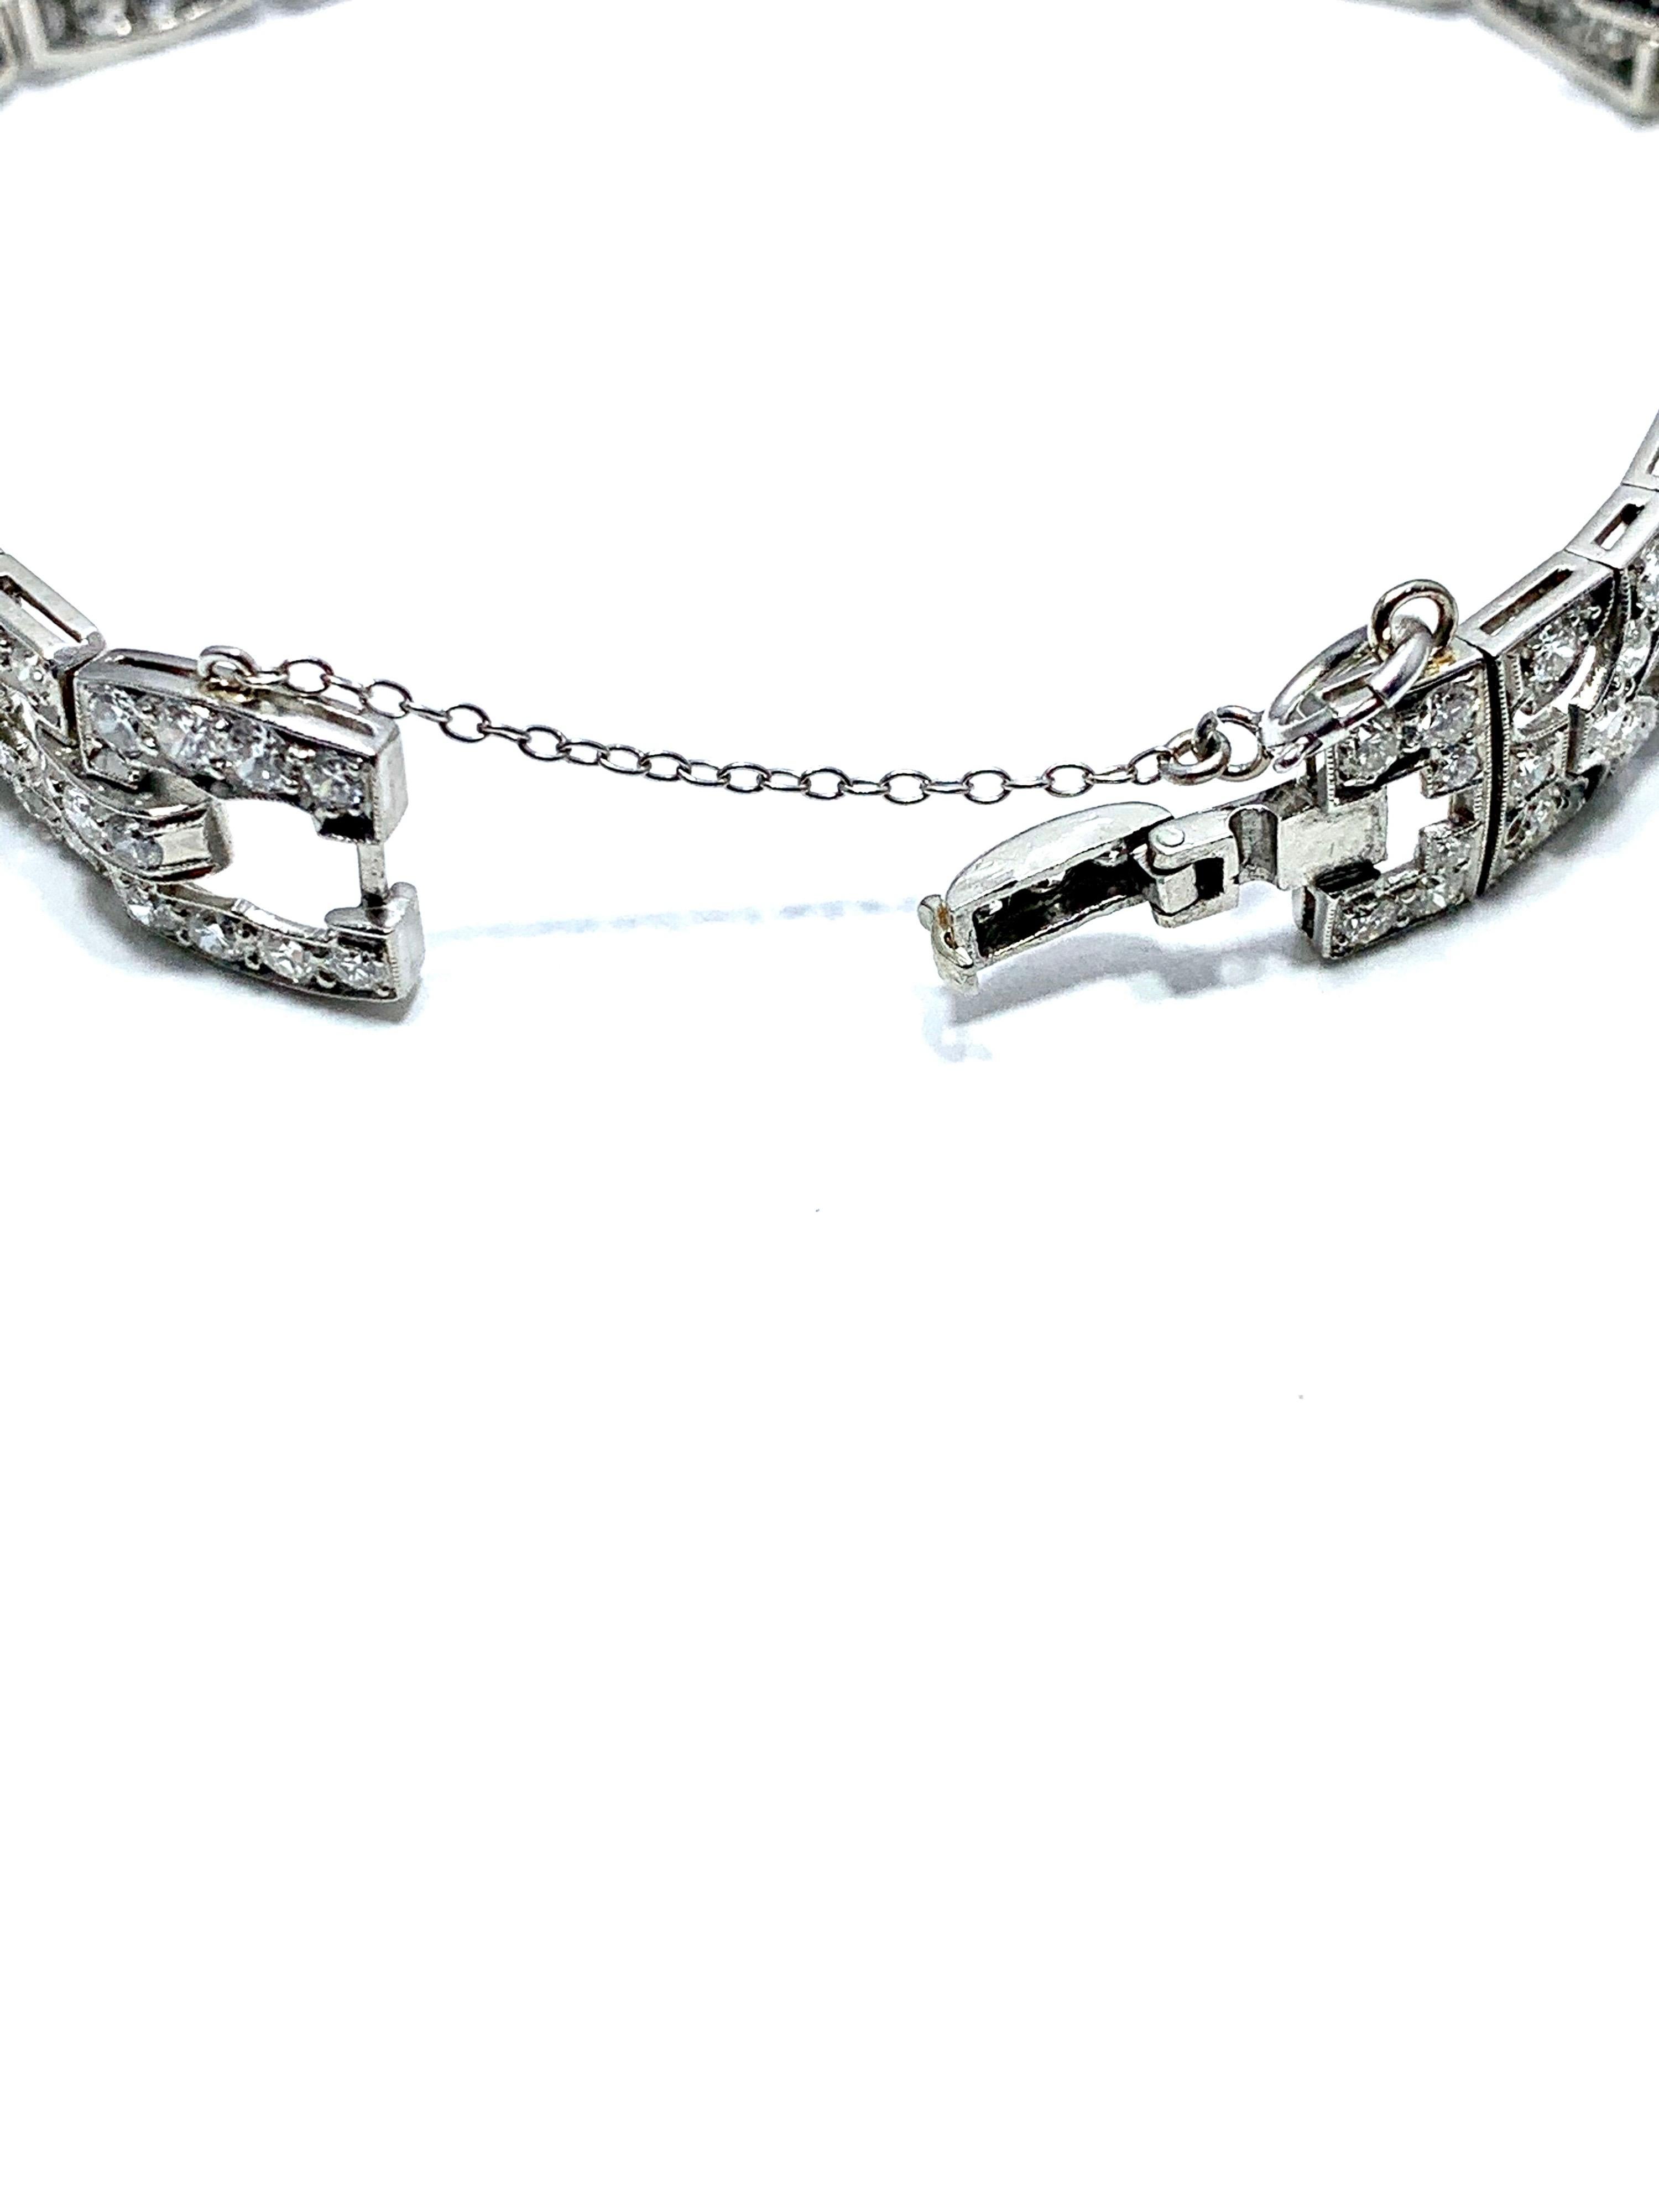 6.26 Carat Art Deco Style Diamond and Platinum Bracelet 2